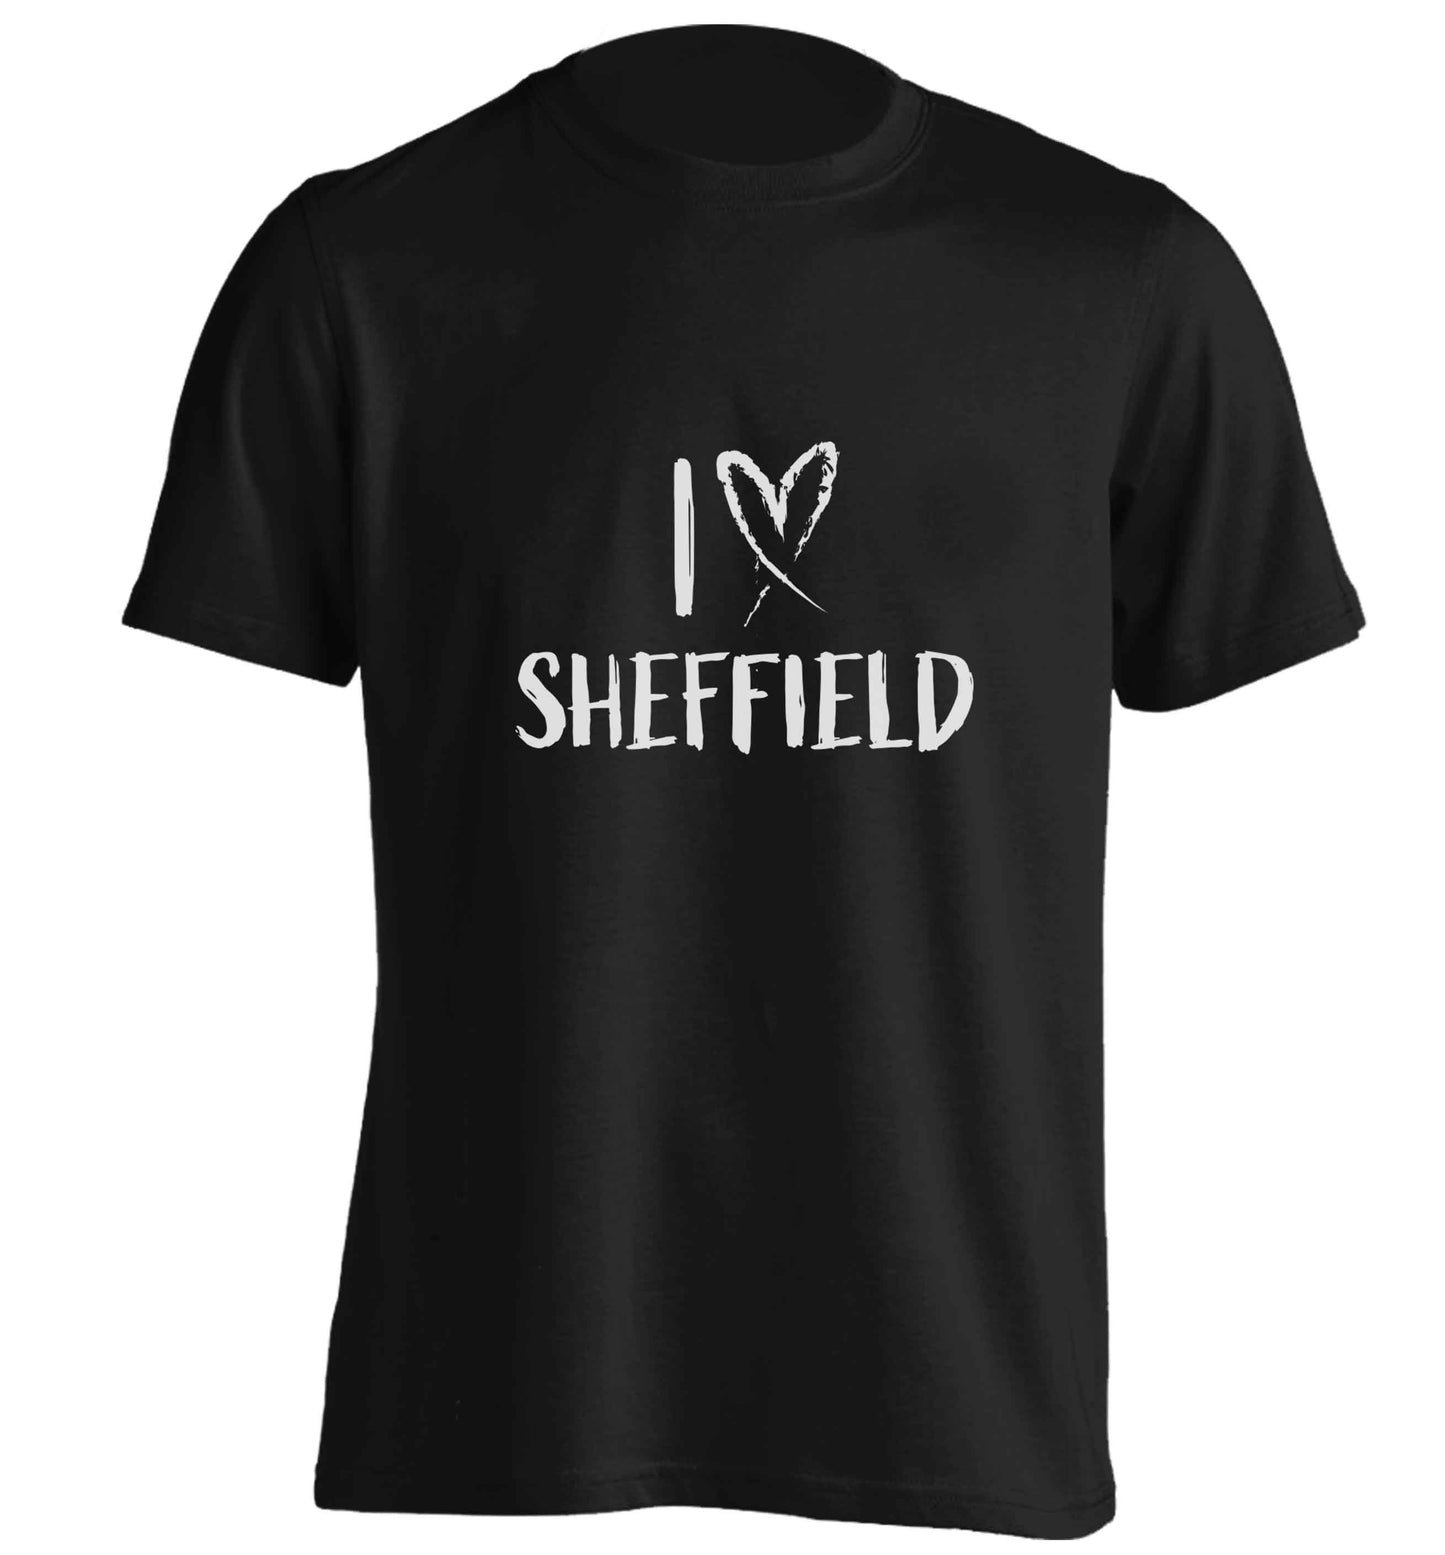 I love Sheffield adults unisex black Tshirt 2XL